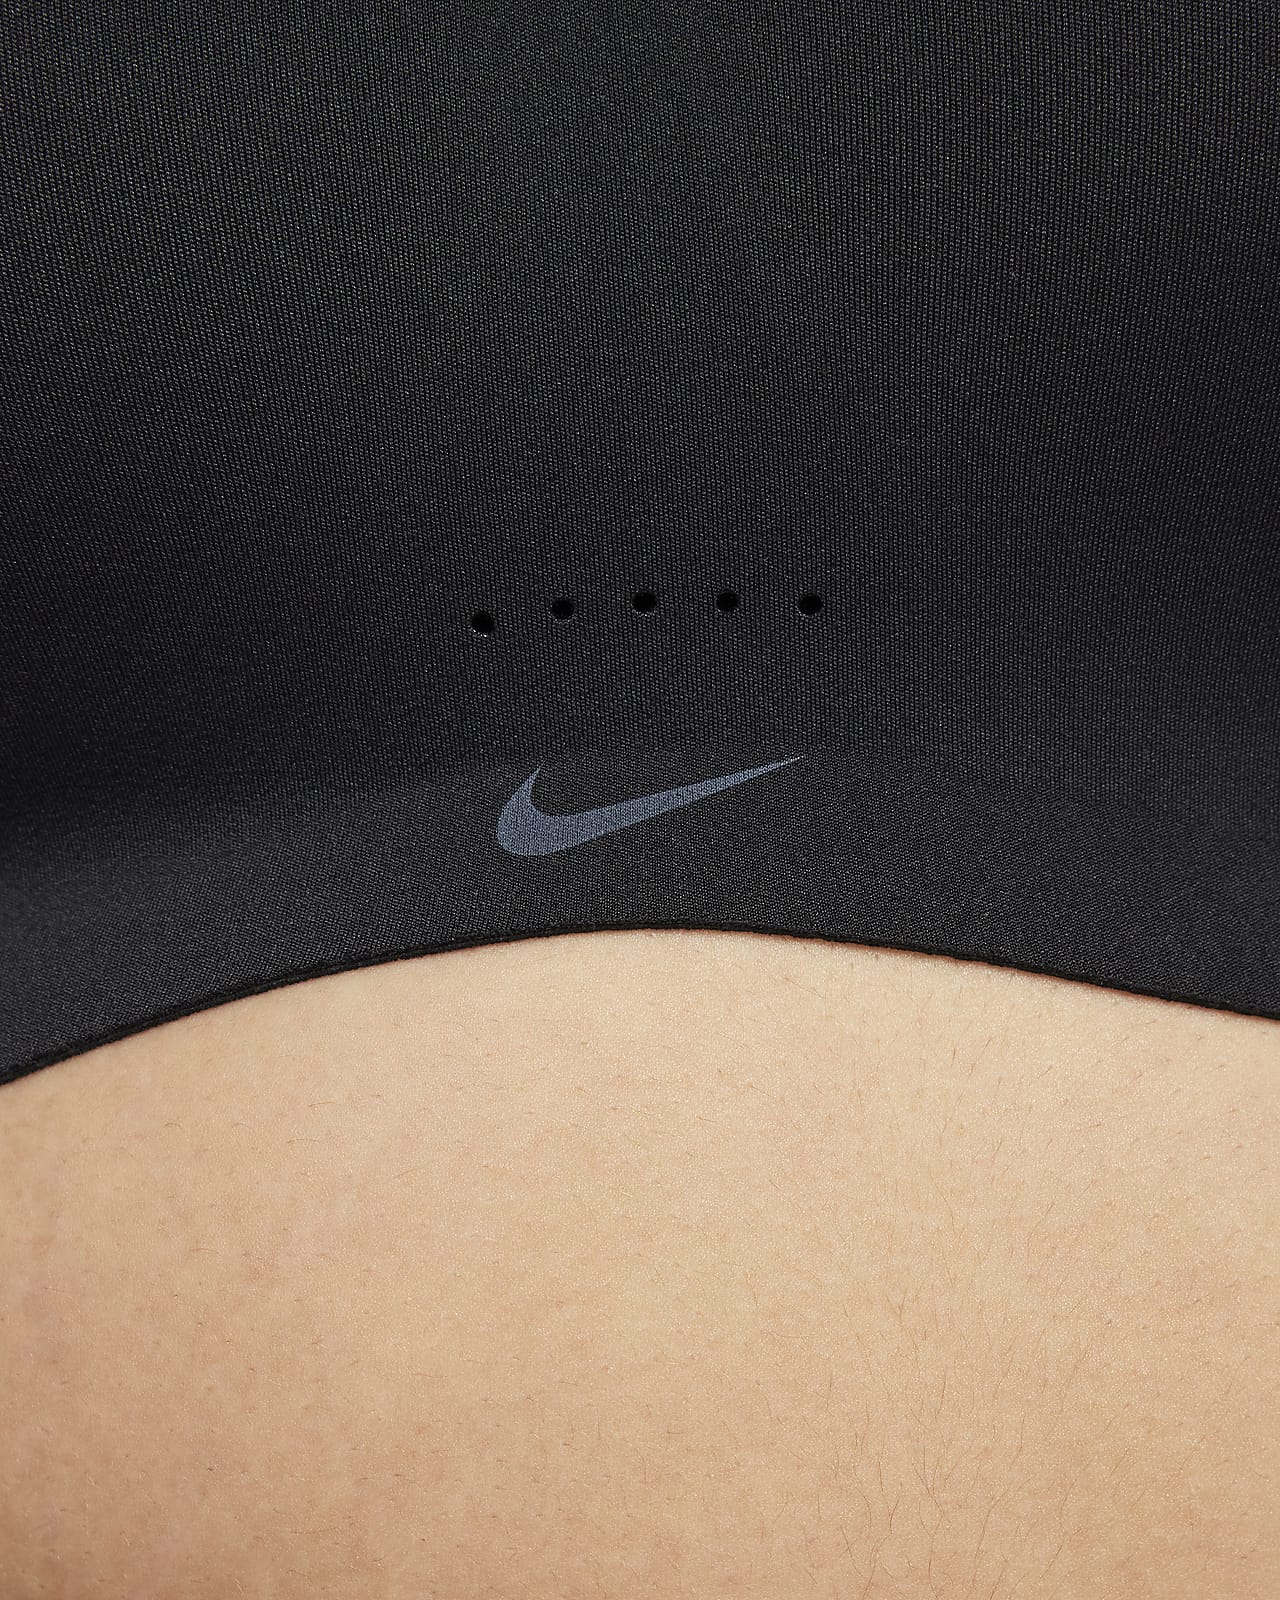 Women's Nike Alate Minimalist Sports Bra Size 2X (C-E) White